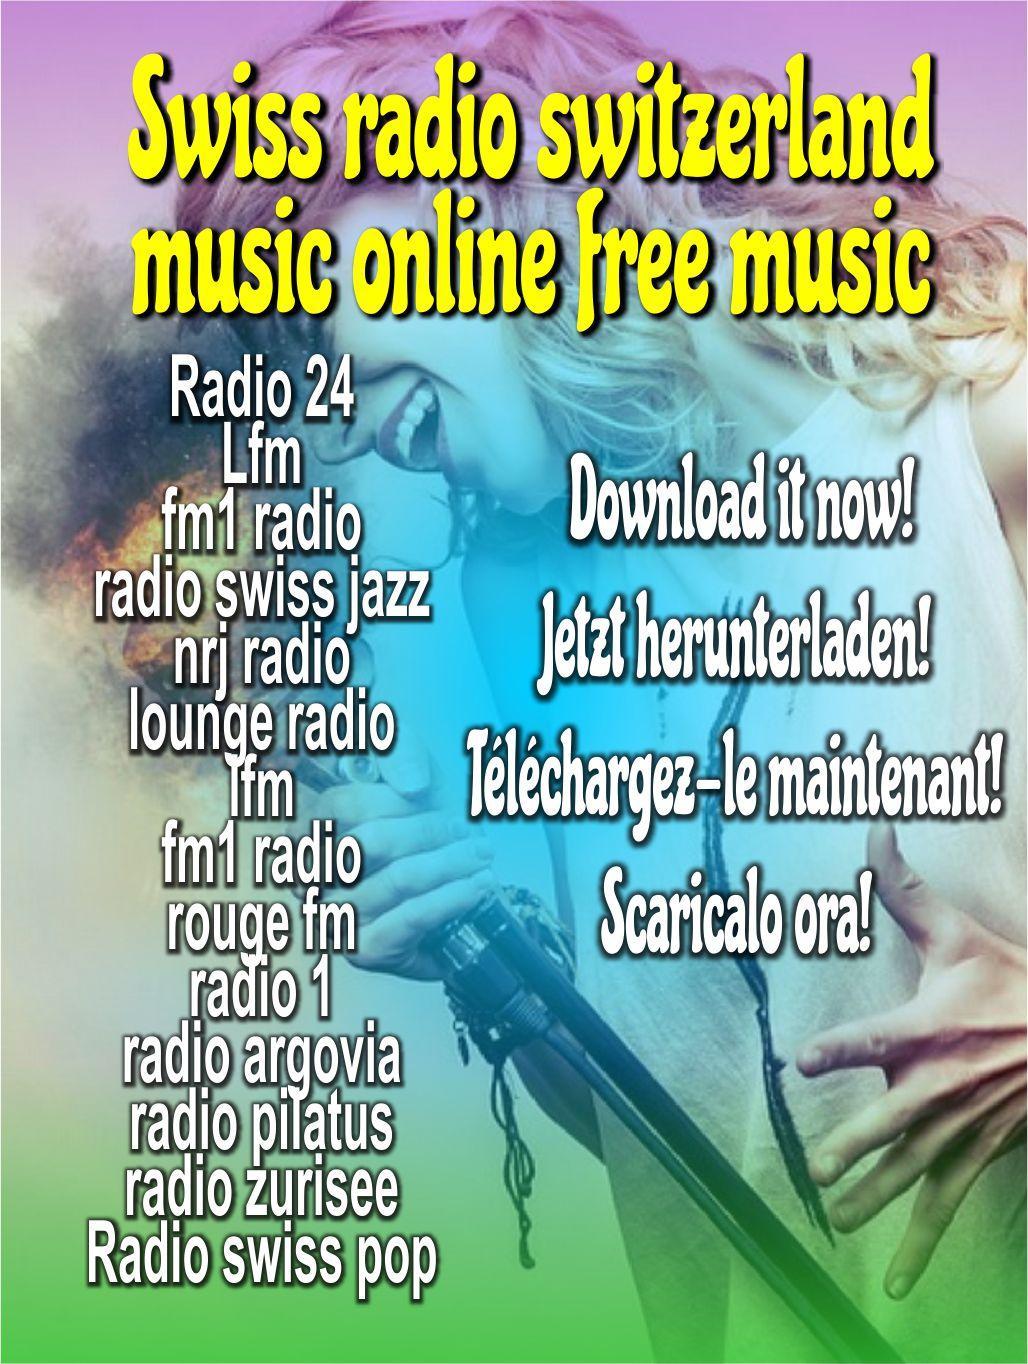 Swiss radio switzerland music online free music for Android - APK Download